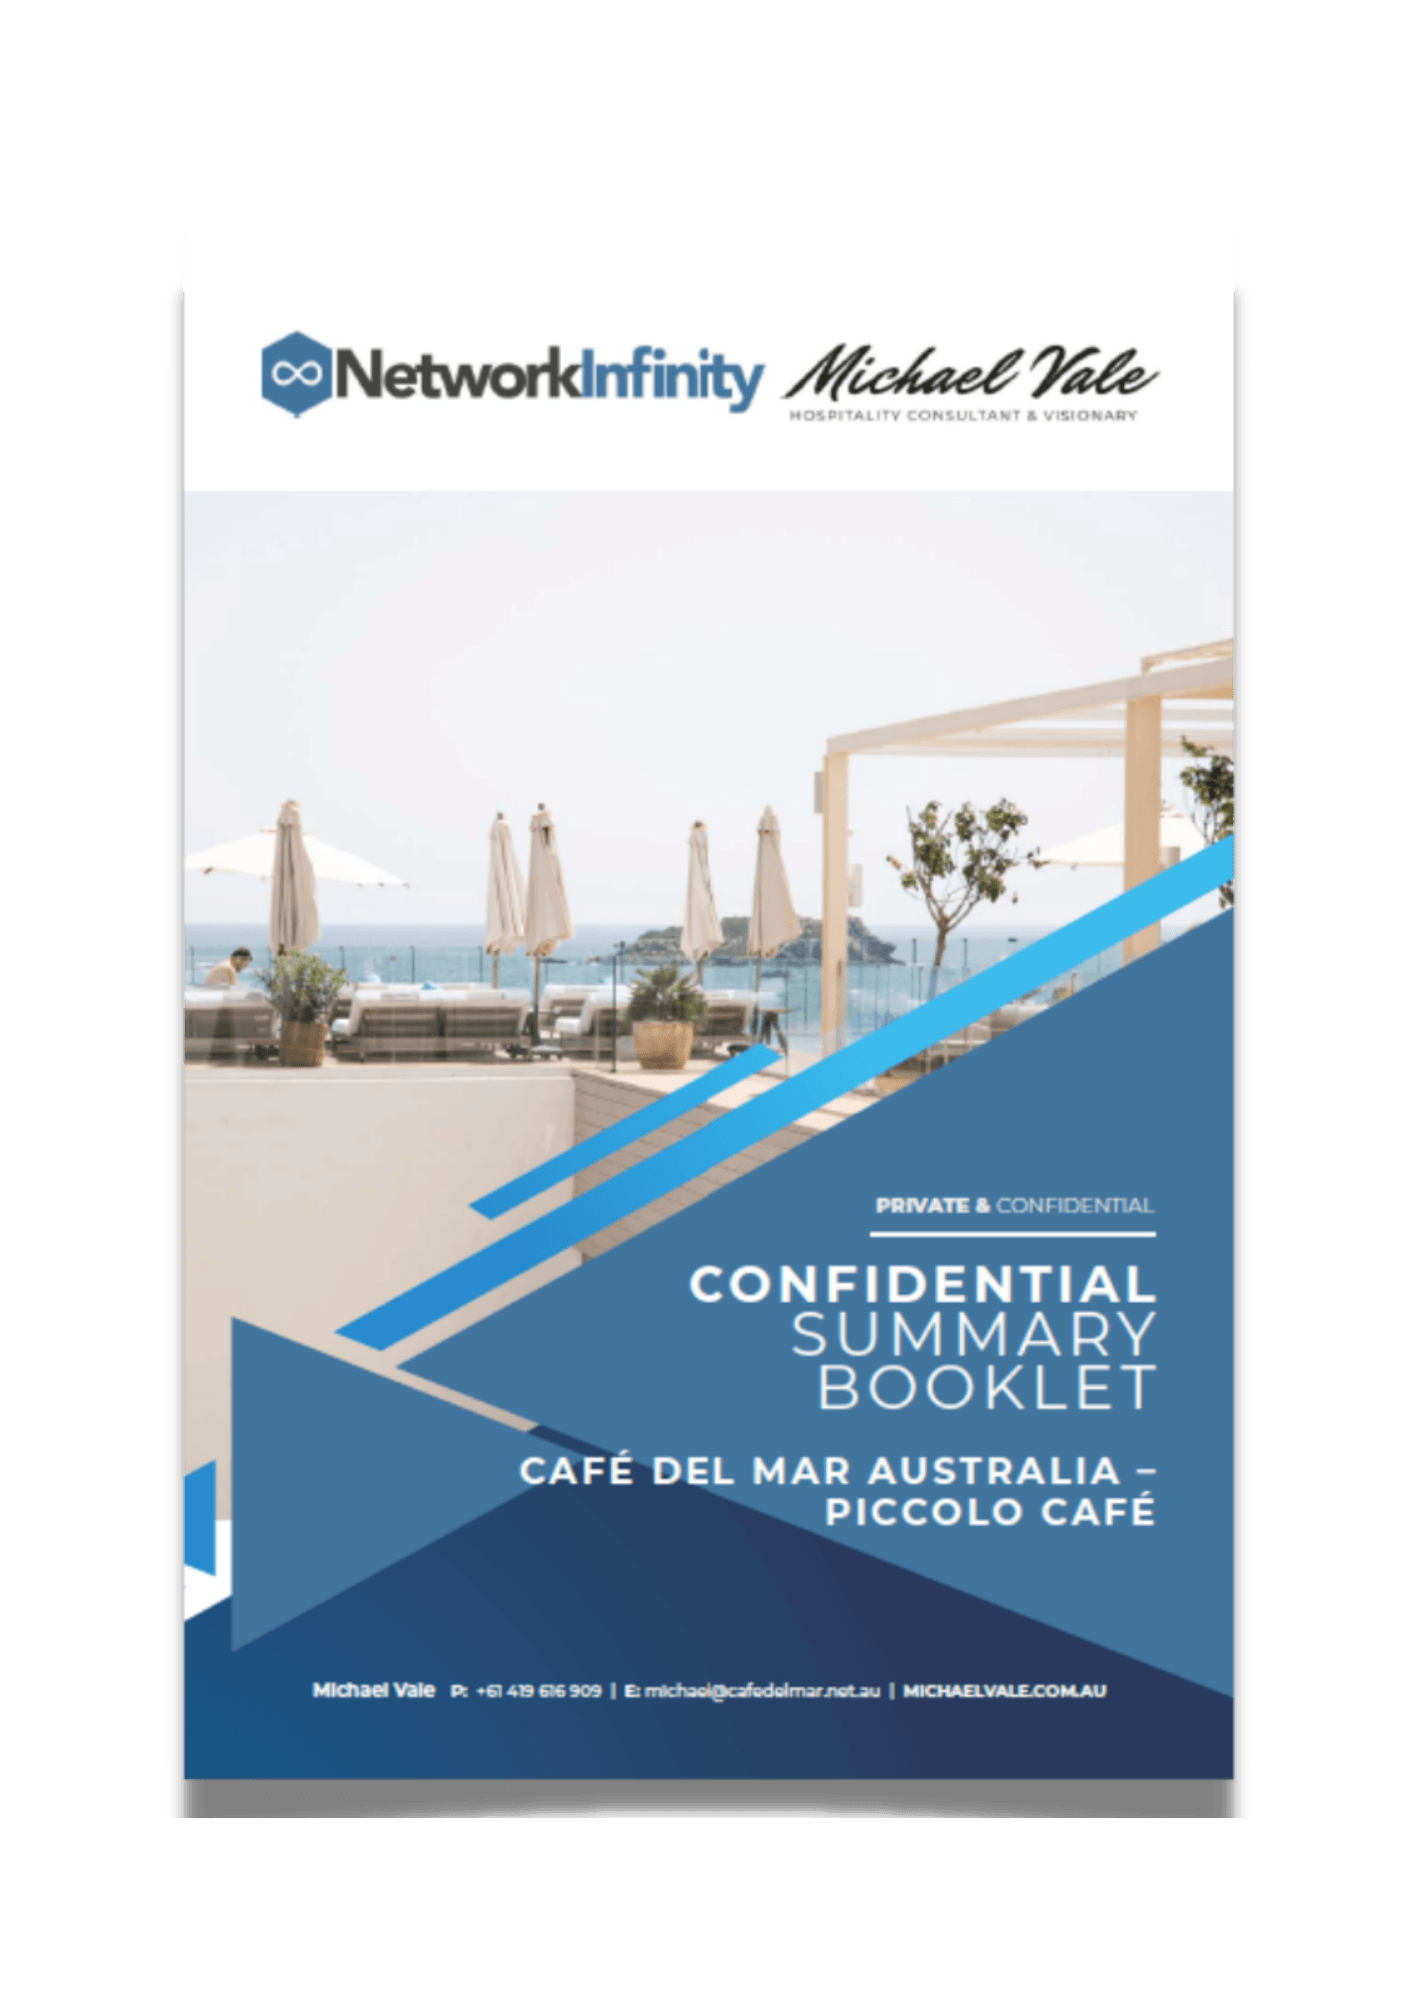 V2_Cafe Del Mar Piccolo Cafe 2022 Confidential Summary Booklet(Medium Resolution)